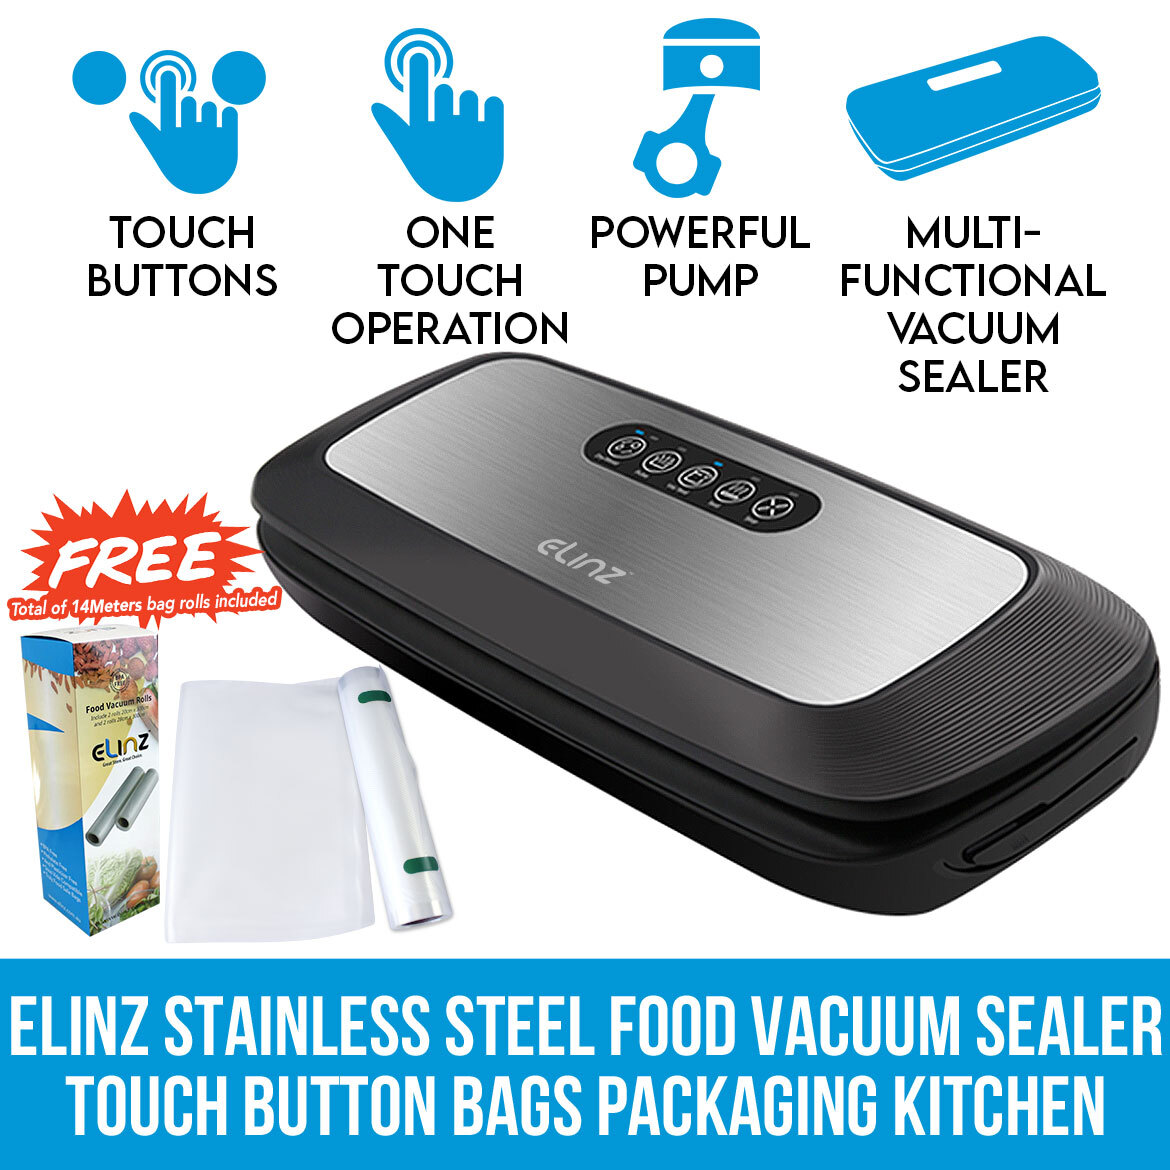 Elinz Stainless Steel Food Vacuum Sealer 4X EXTRA Rolls Packaging Storage Saver Kitchen